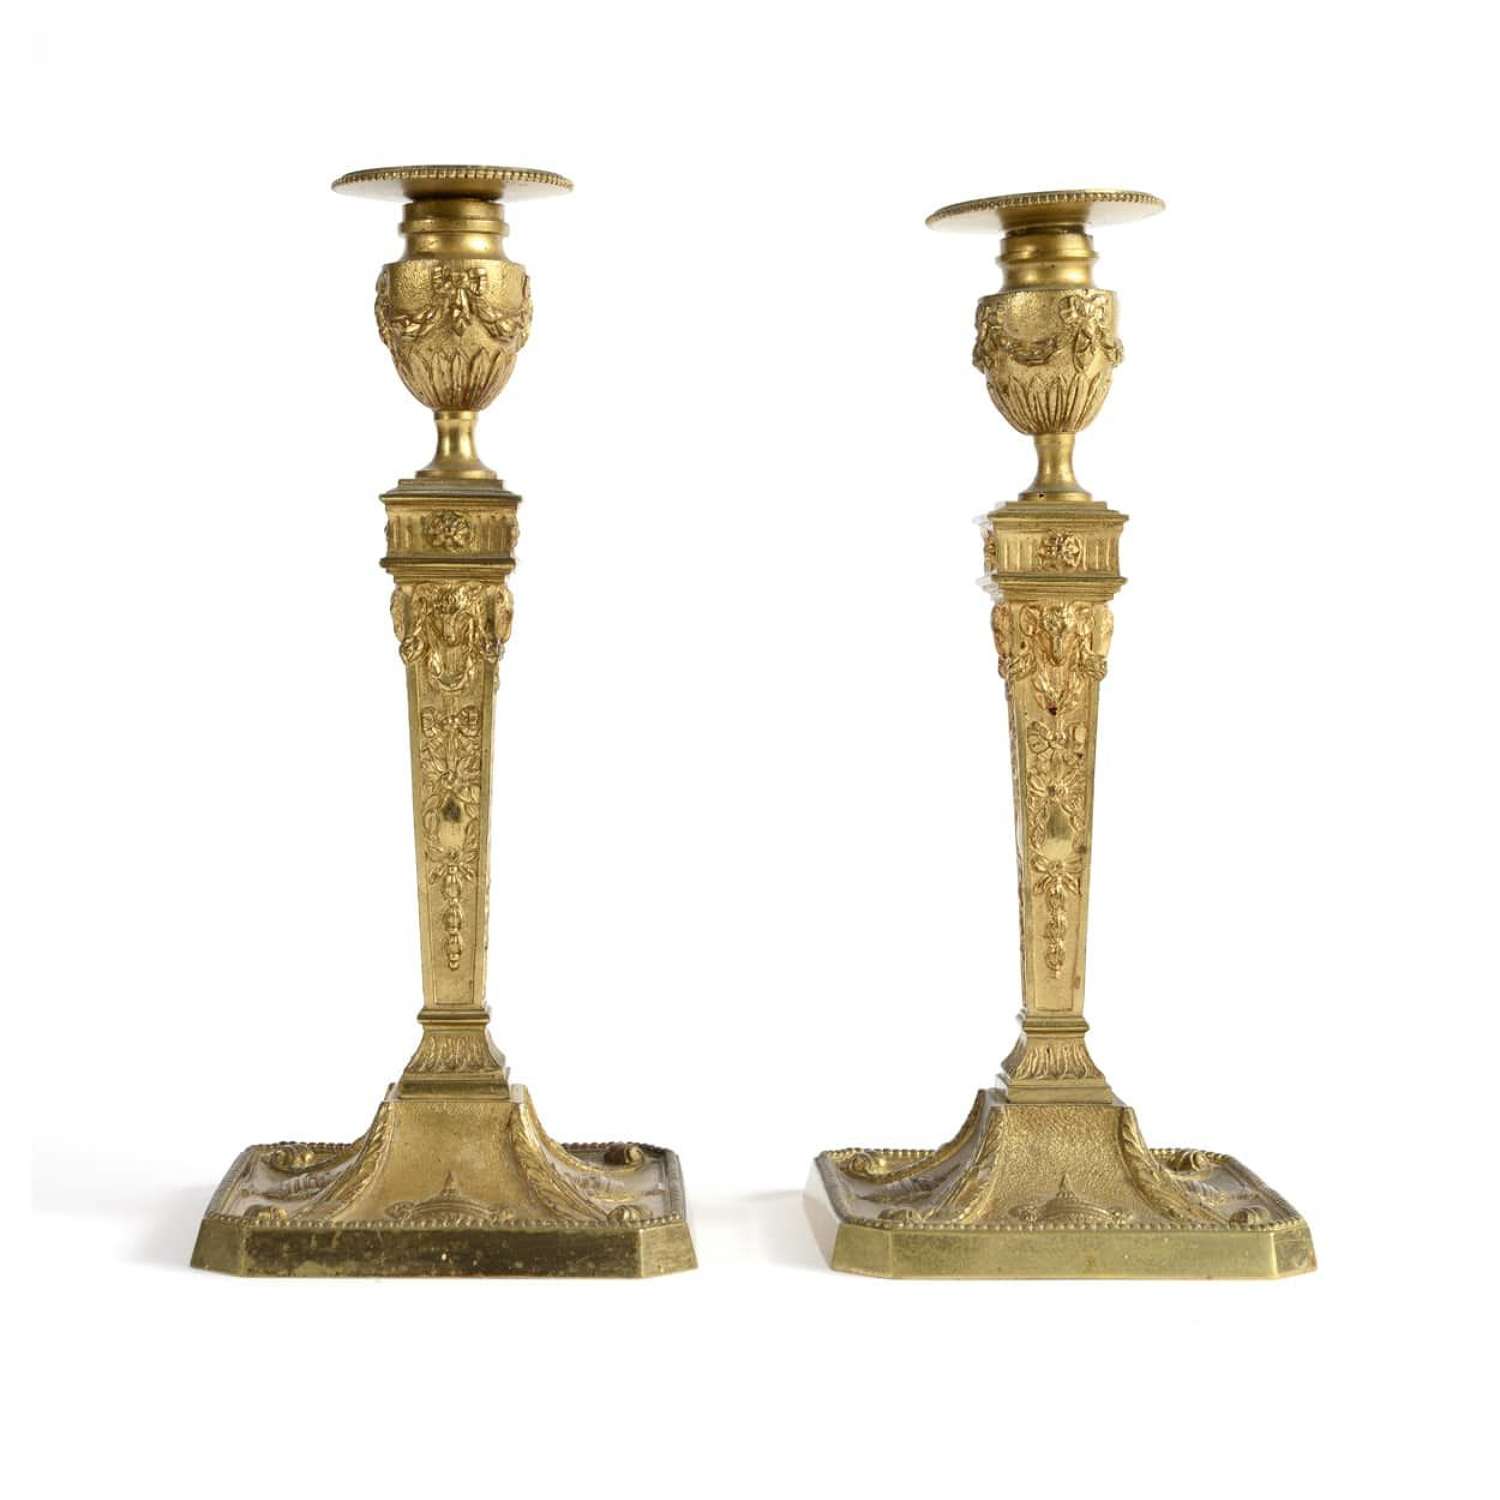 Pair of French ormolu candlesticks